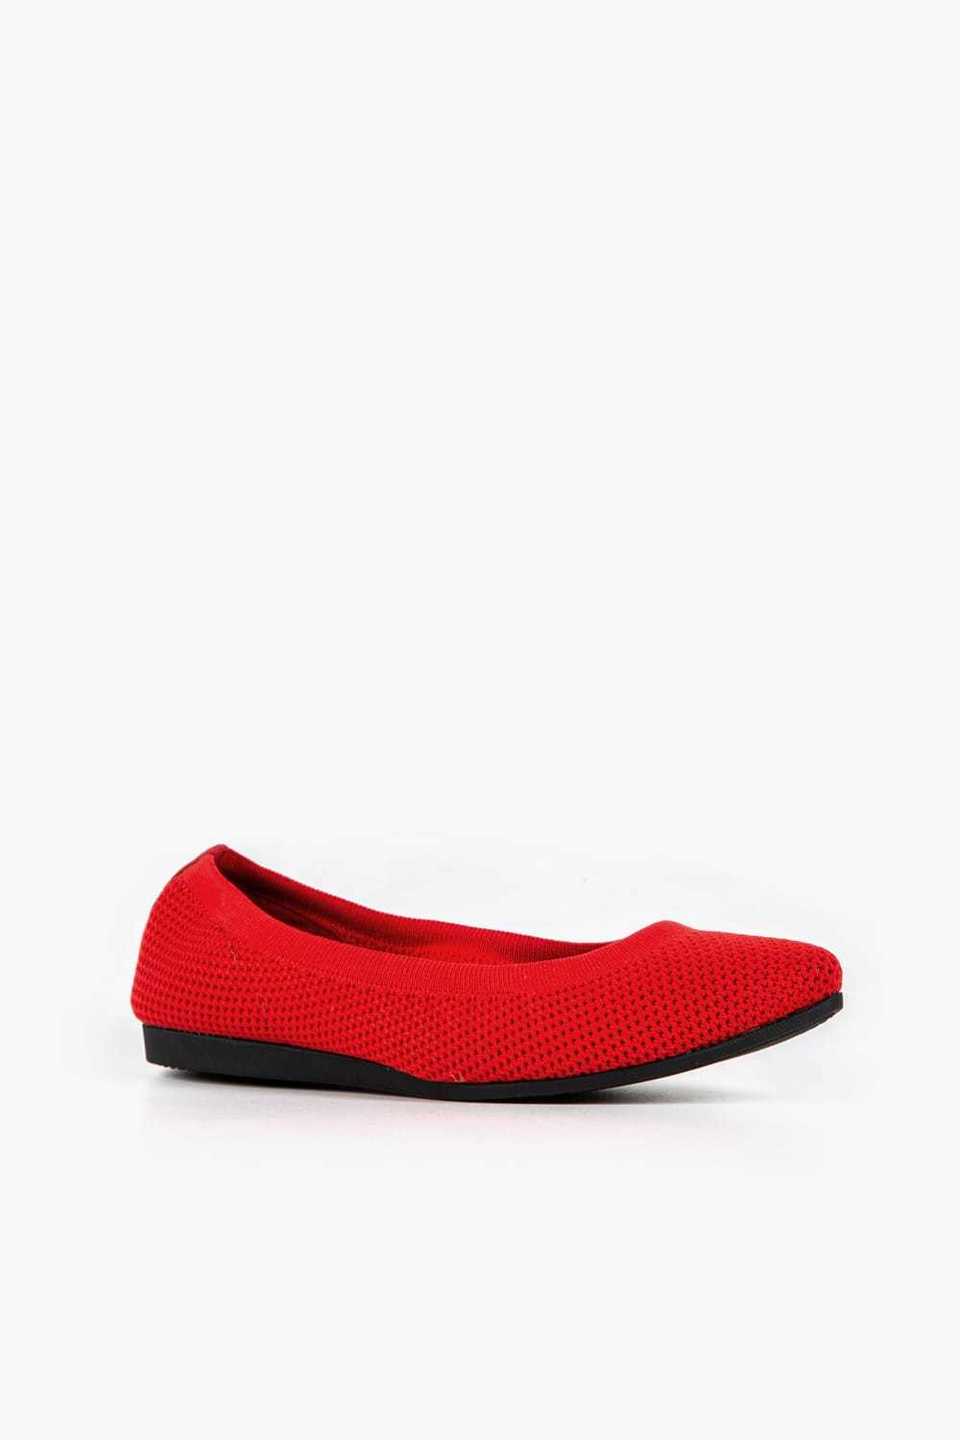 Women's Mesh Ballet Red - Orleans Shoe Co.